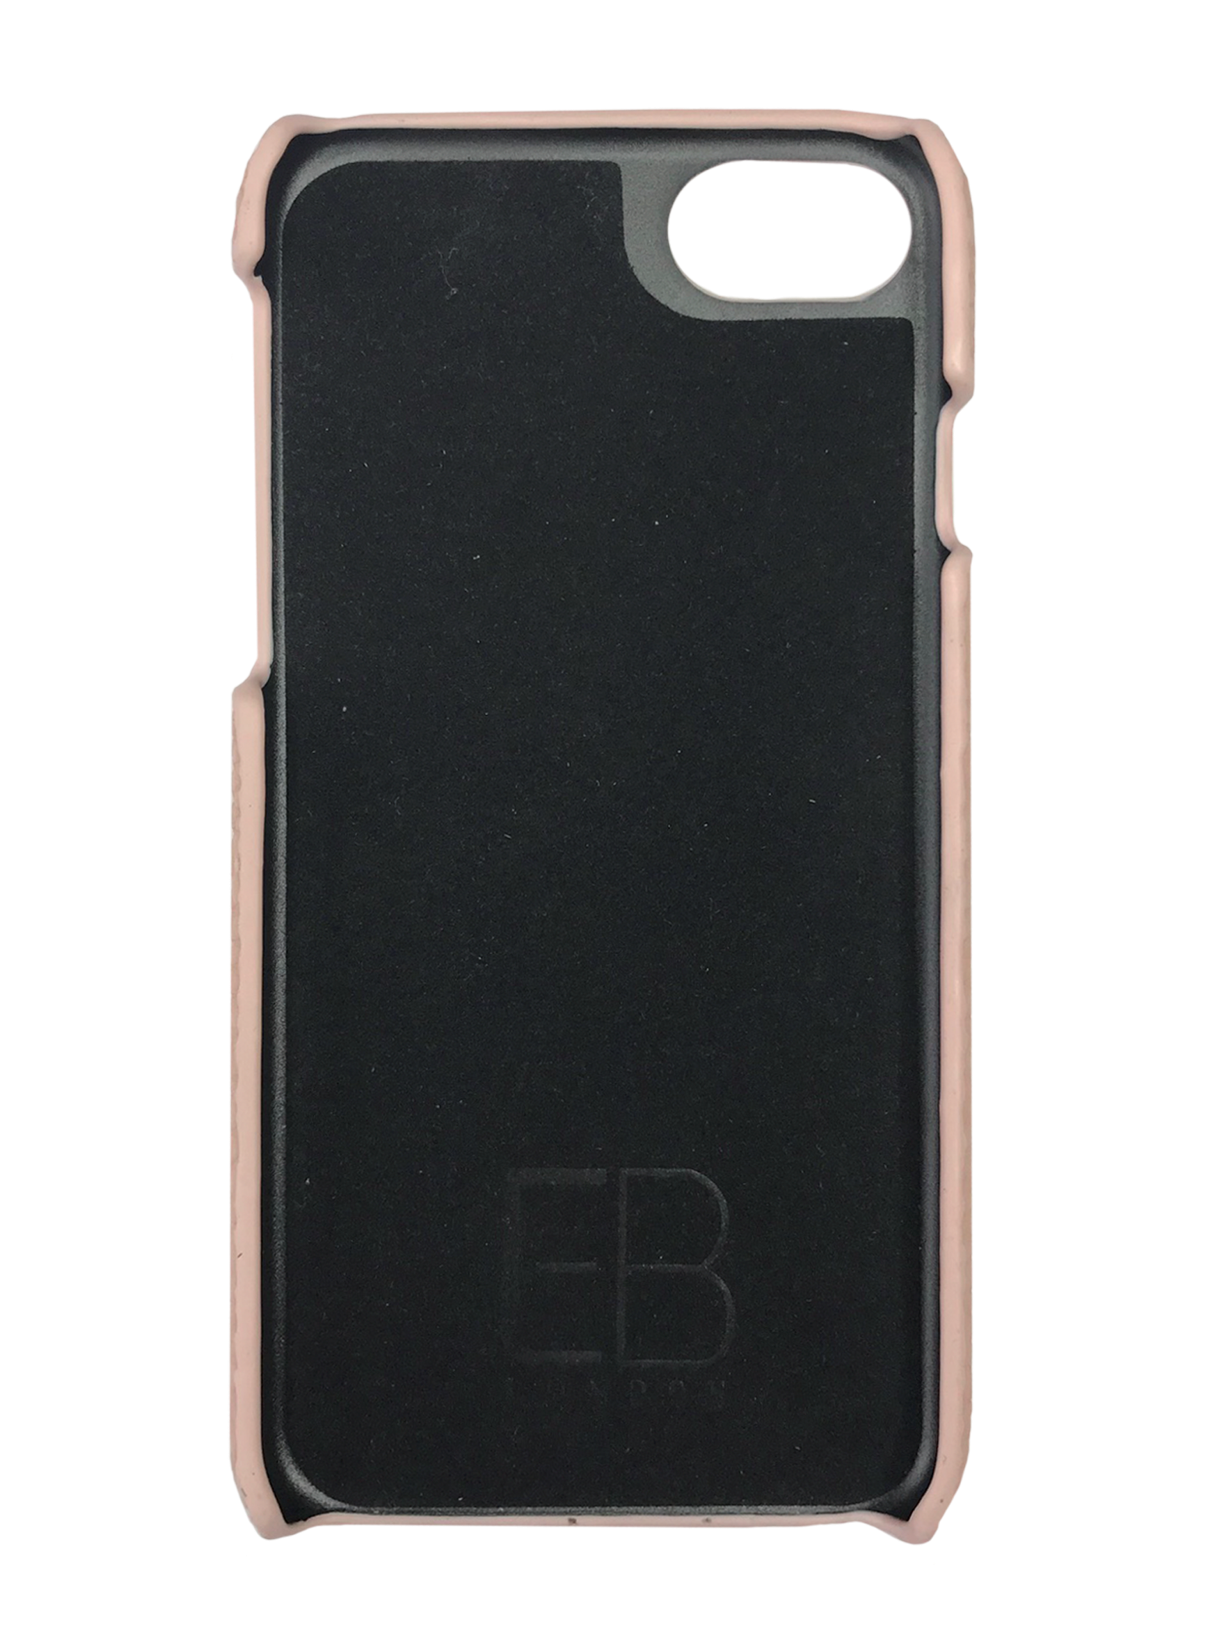 Blush Pink - iPhone 6/6s/7/8